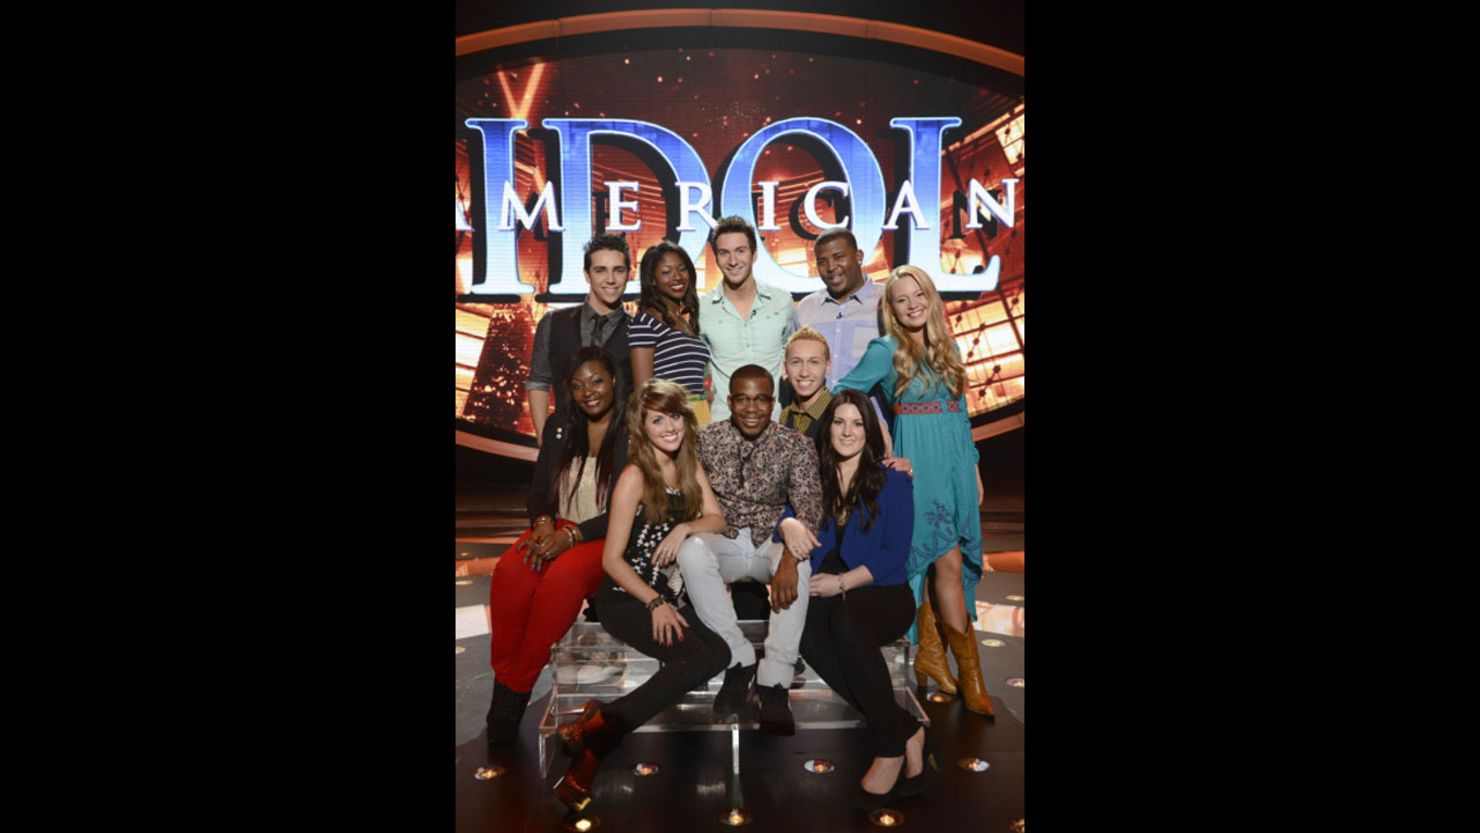 "American Idol" has announced its Top 10 for season 12.